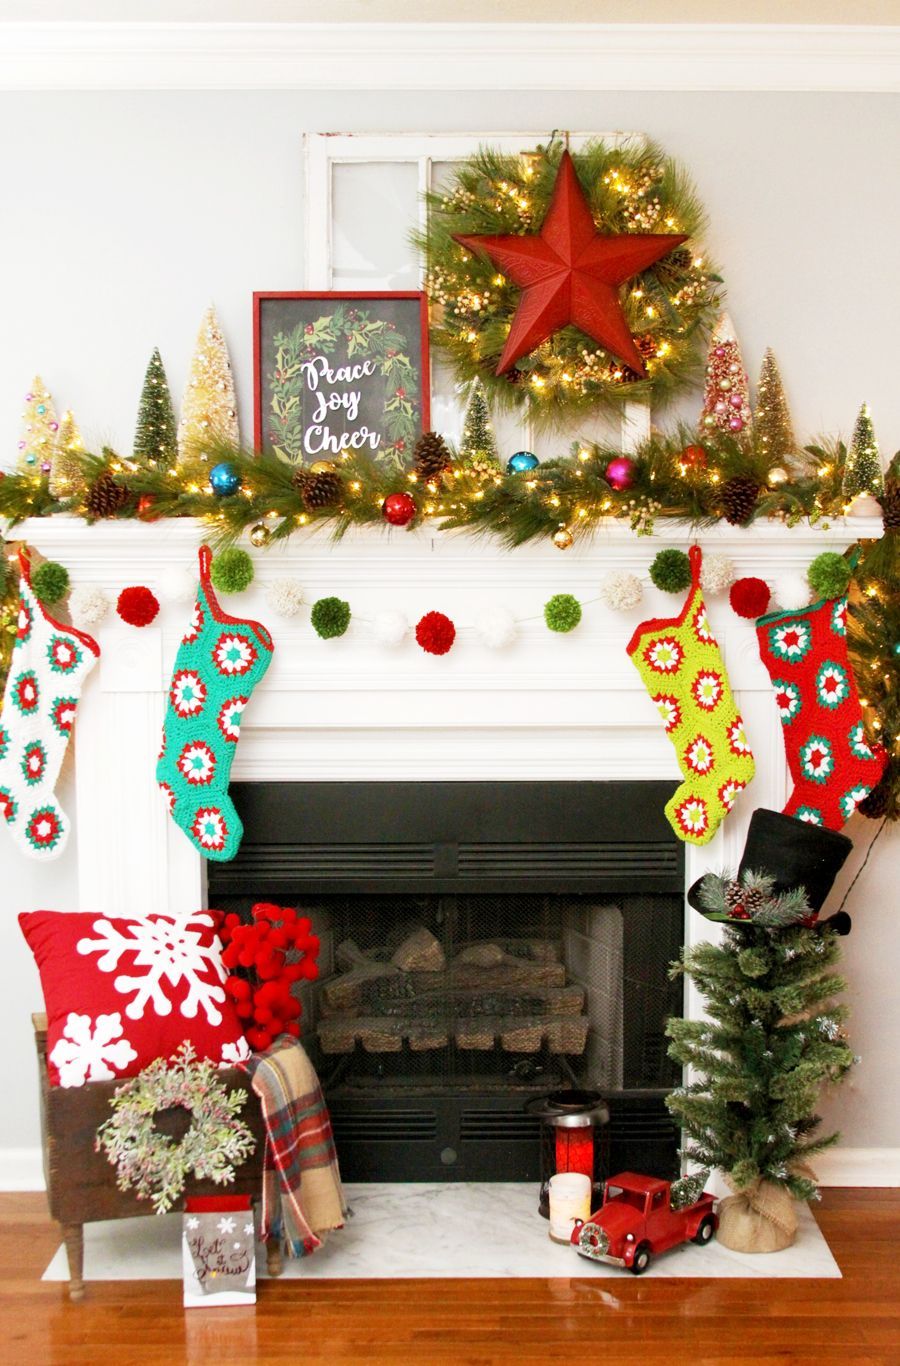 Festive Christmas Mantel Ideas to Style a Holiday Mantel